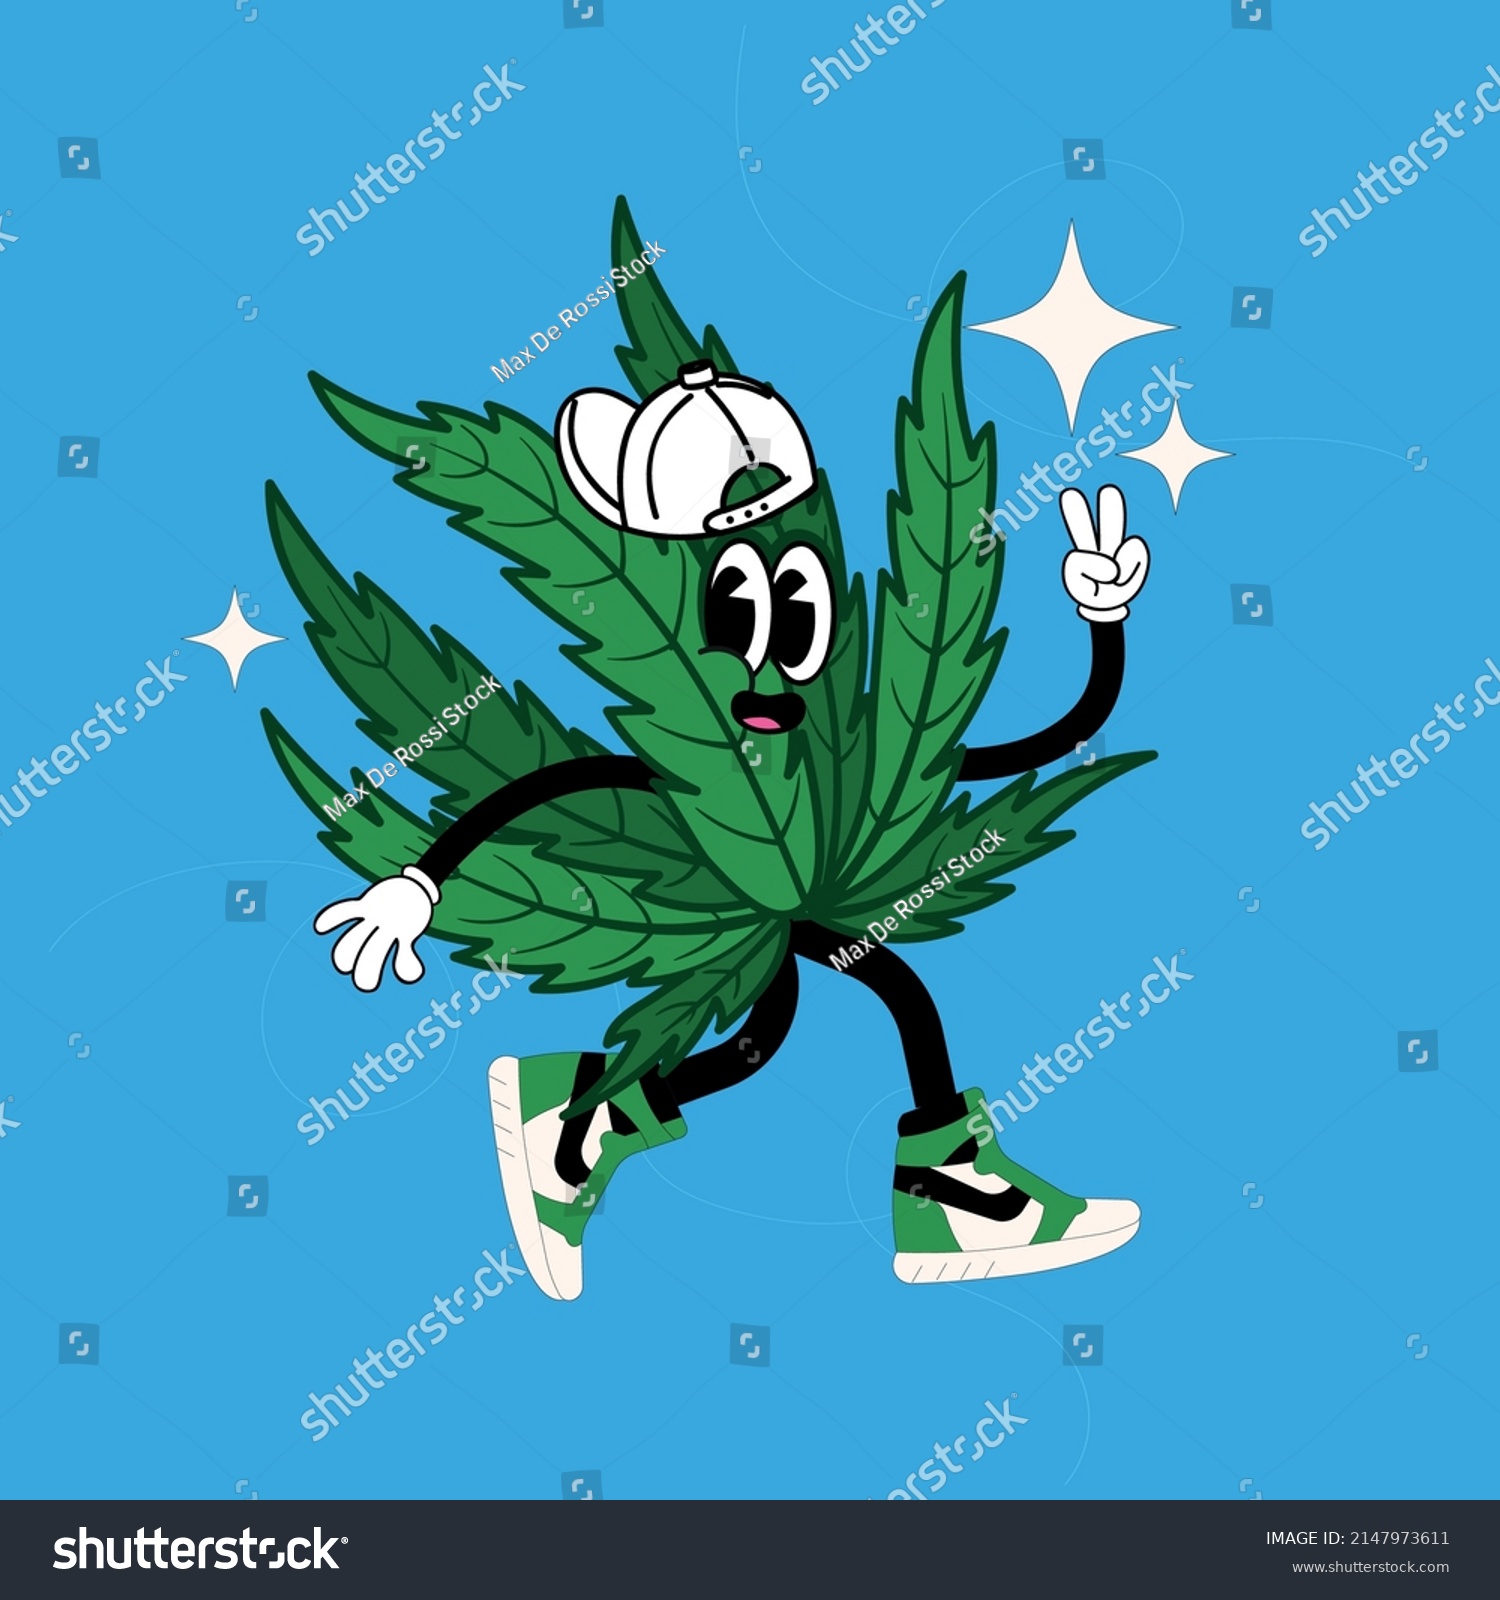 18 Cannabis star joint smoke logo Images, Stock Photos & Vectors ...